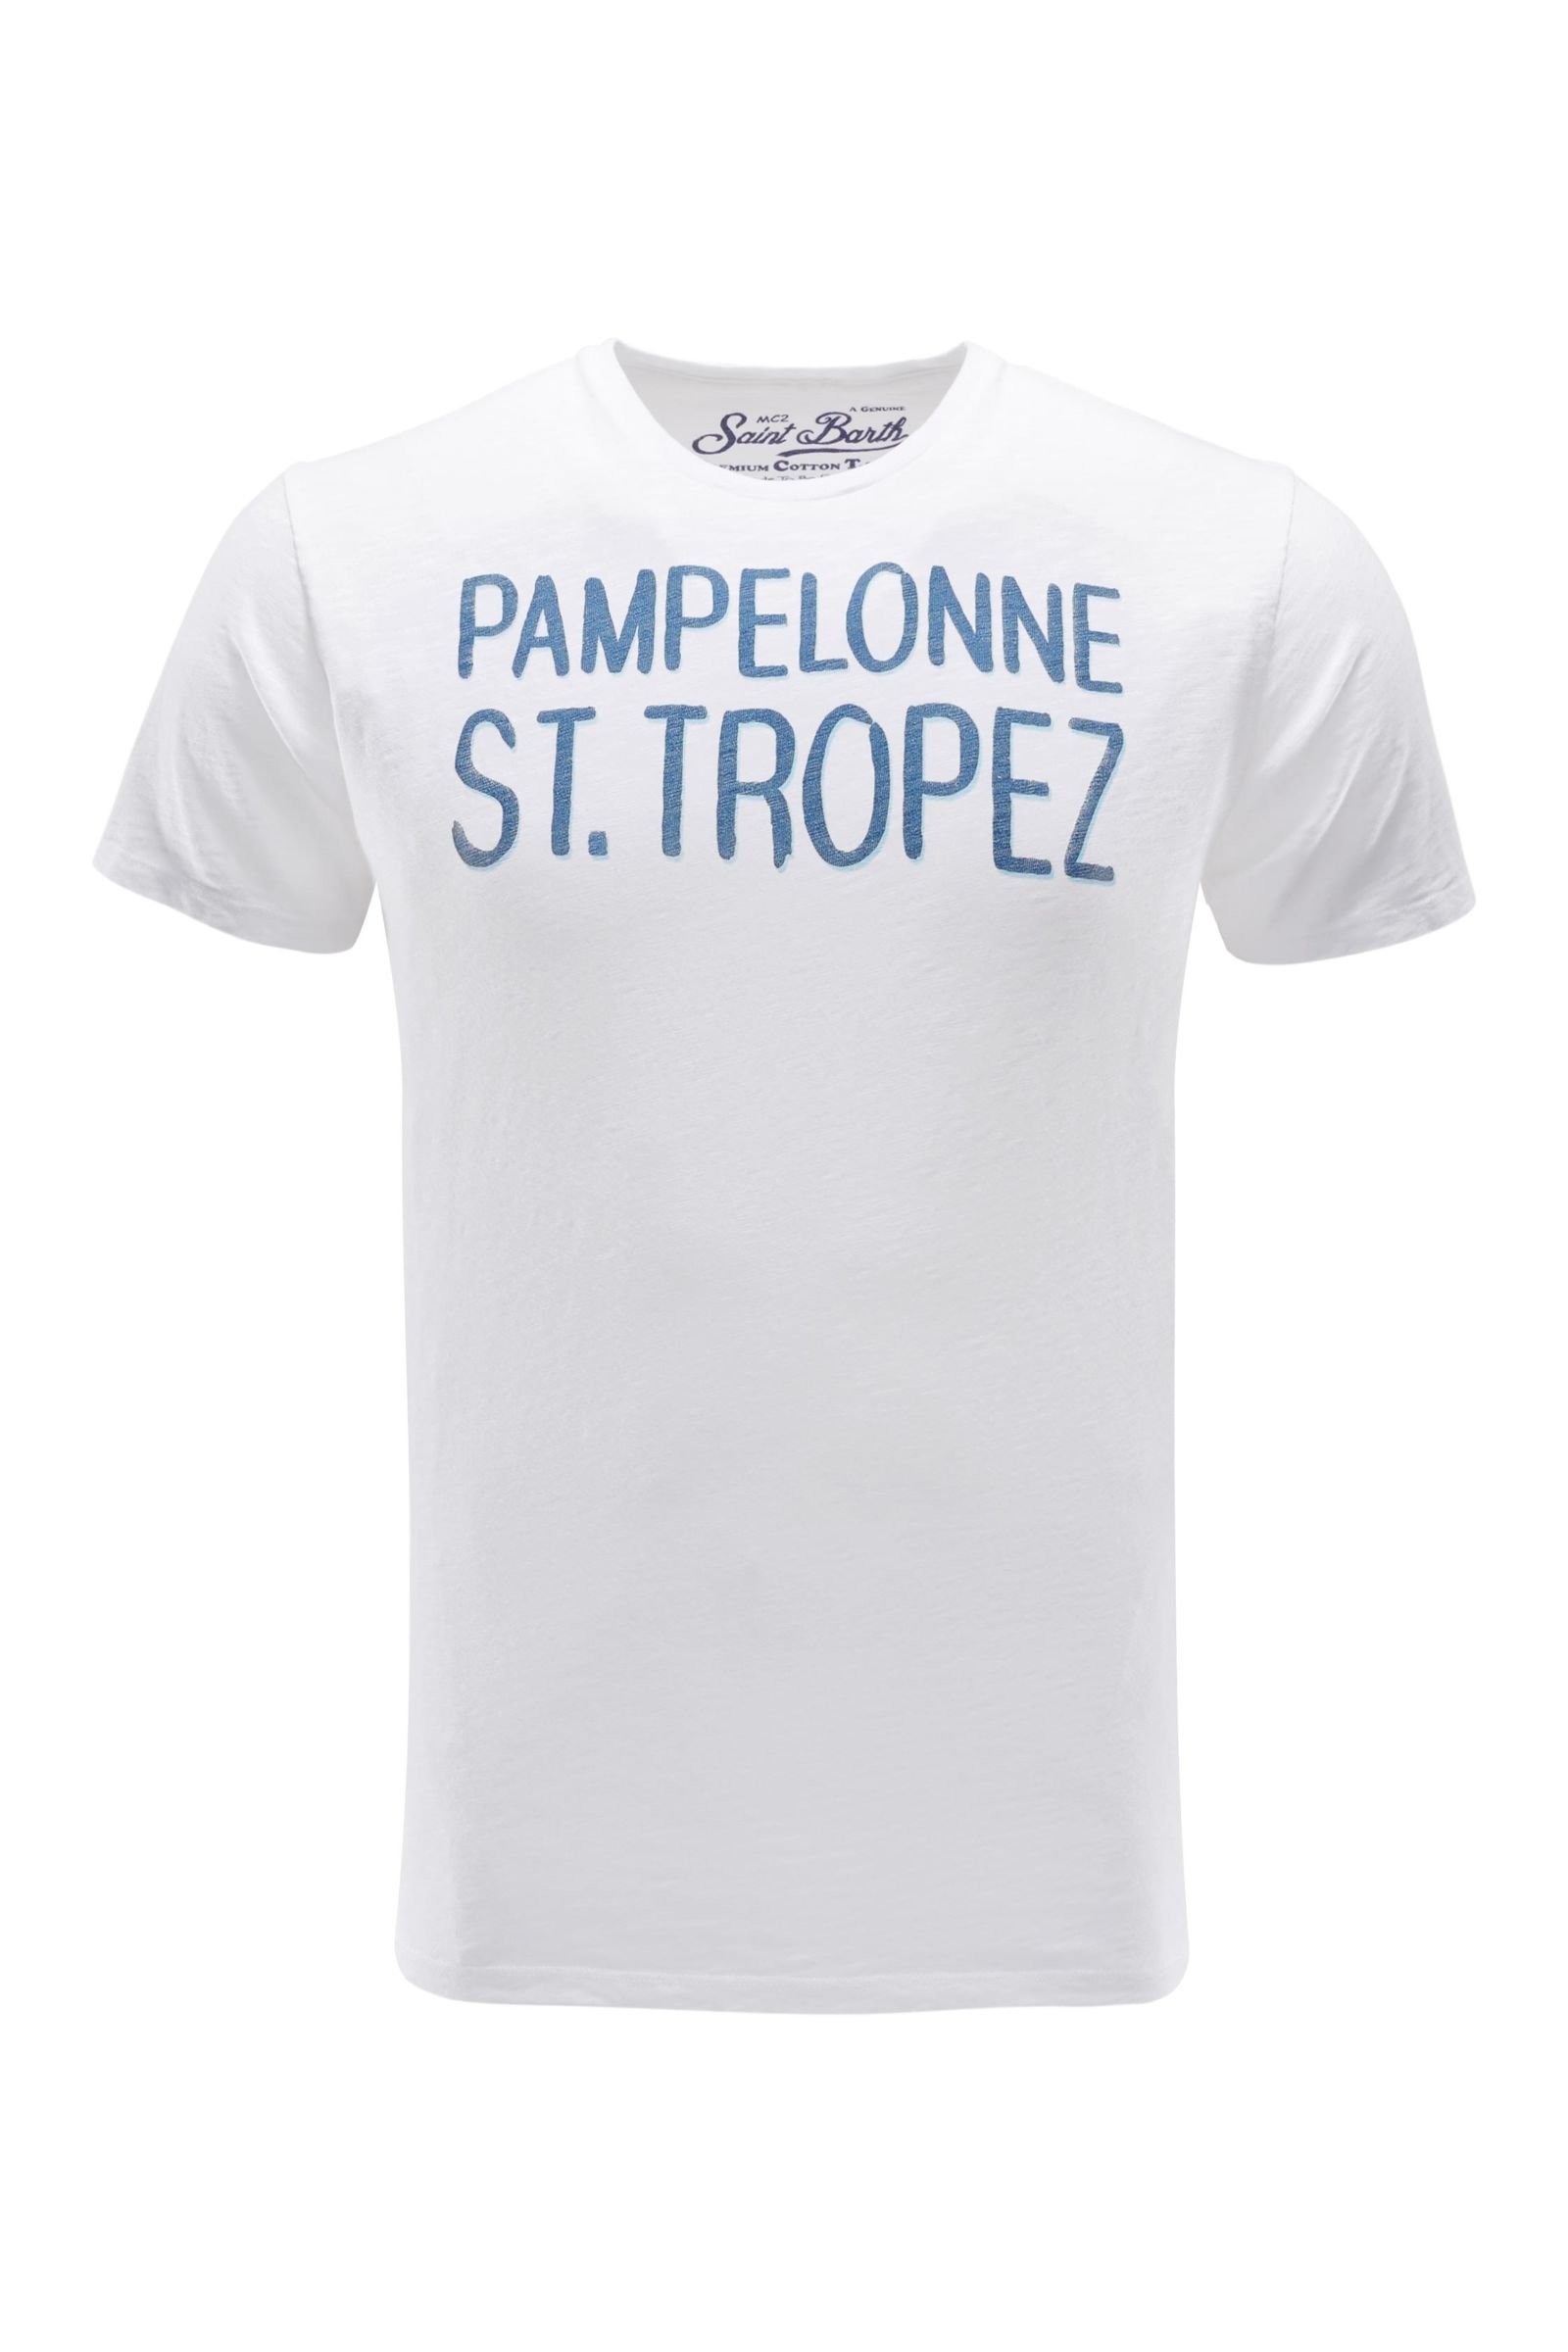 Crew neck T-shirt 'Pampelonne' white